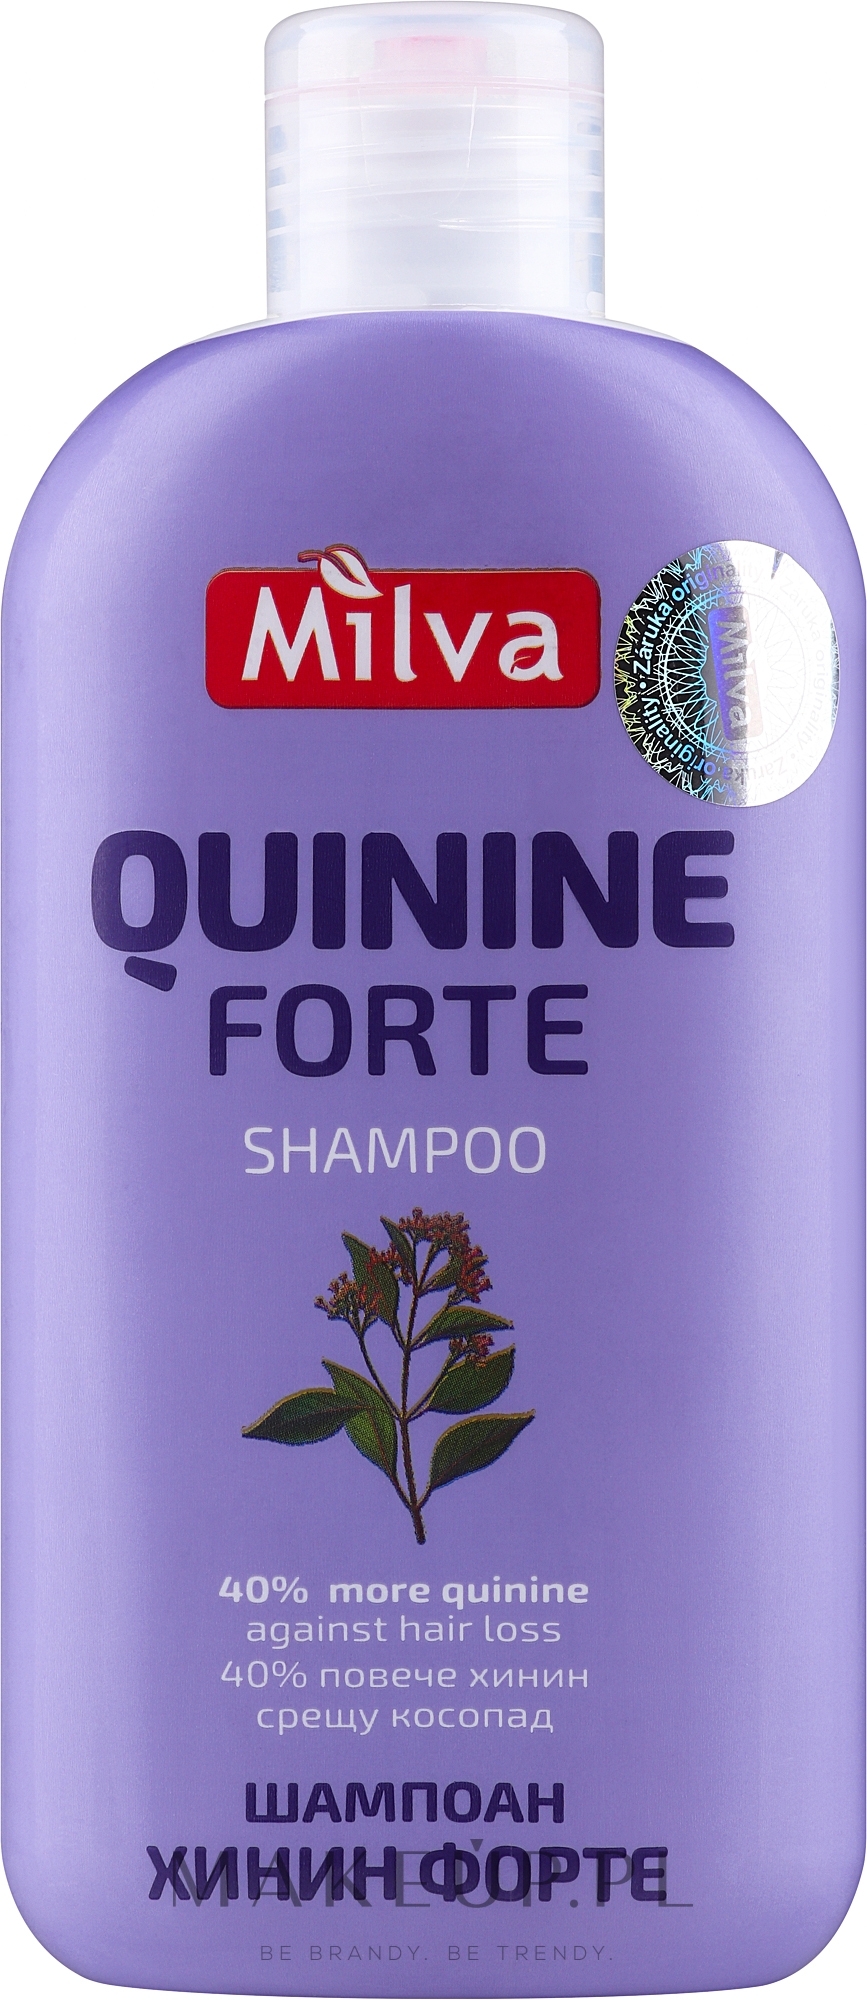 milva szampon z chininą